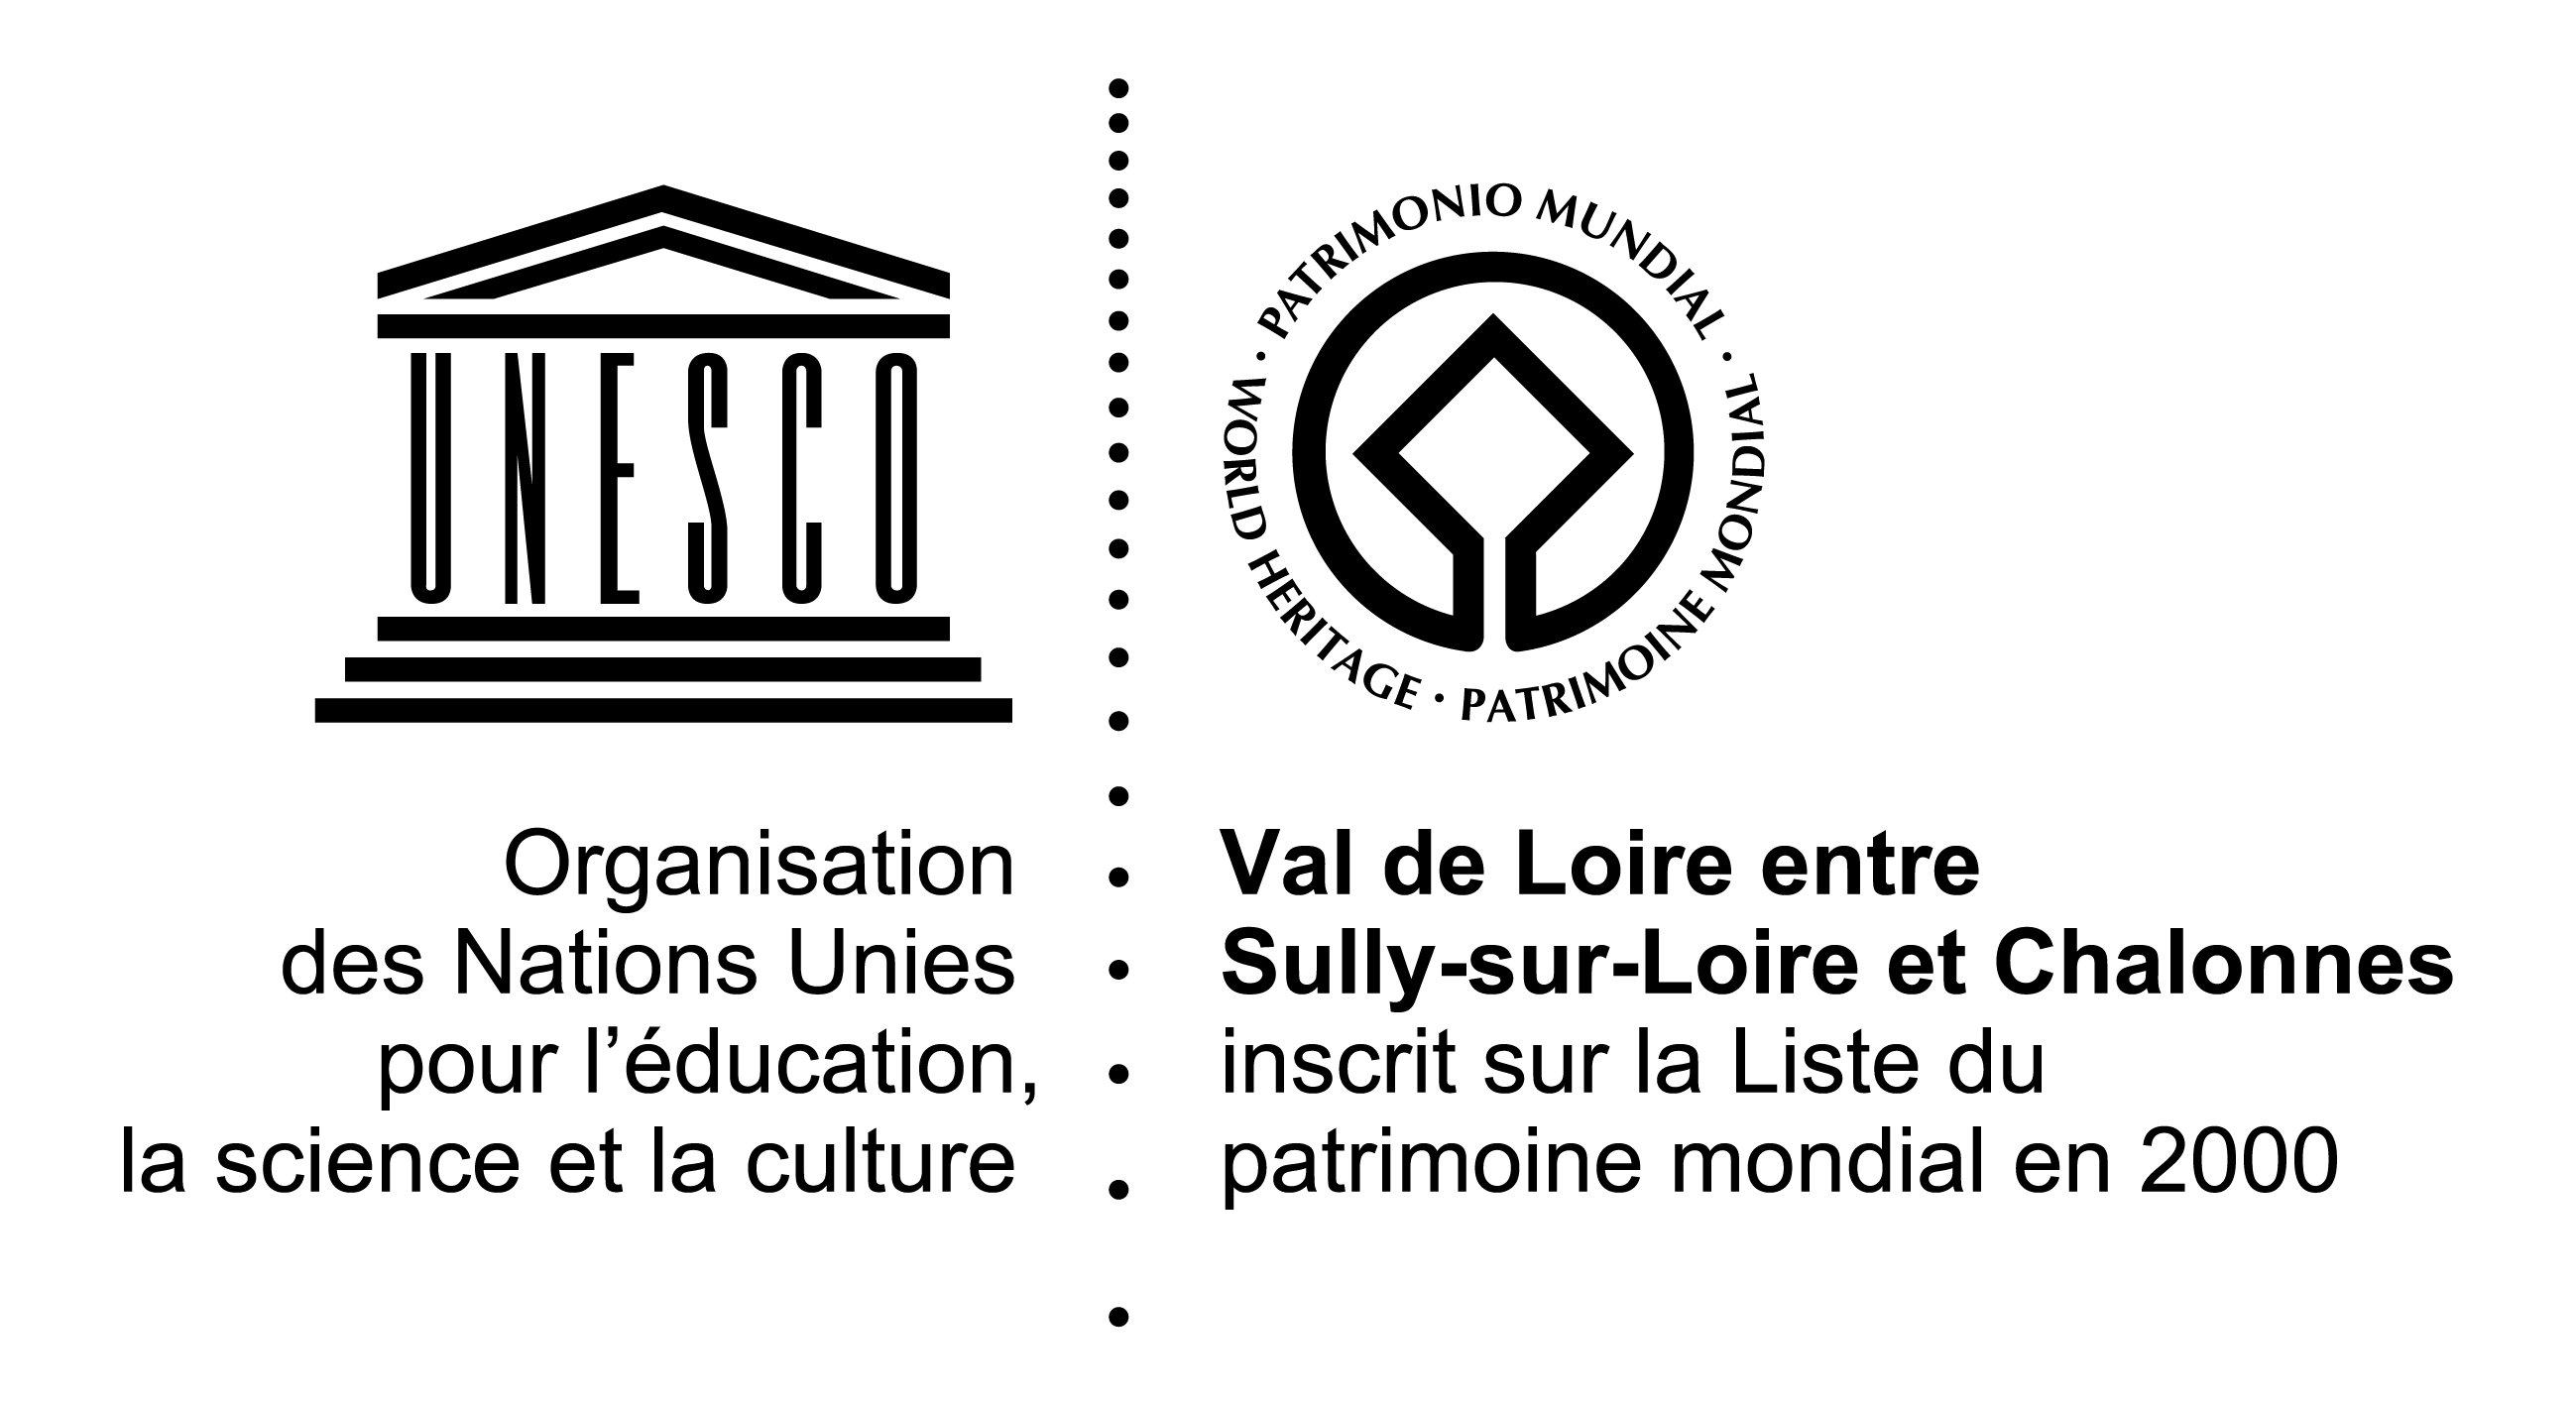 Unesco heritage site. ЮНЕСКО. ЮНЕСКО эмблема. Символ ЮНЕСКО.